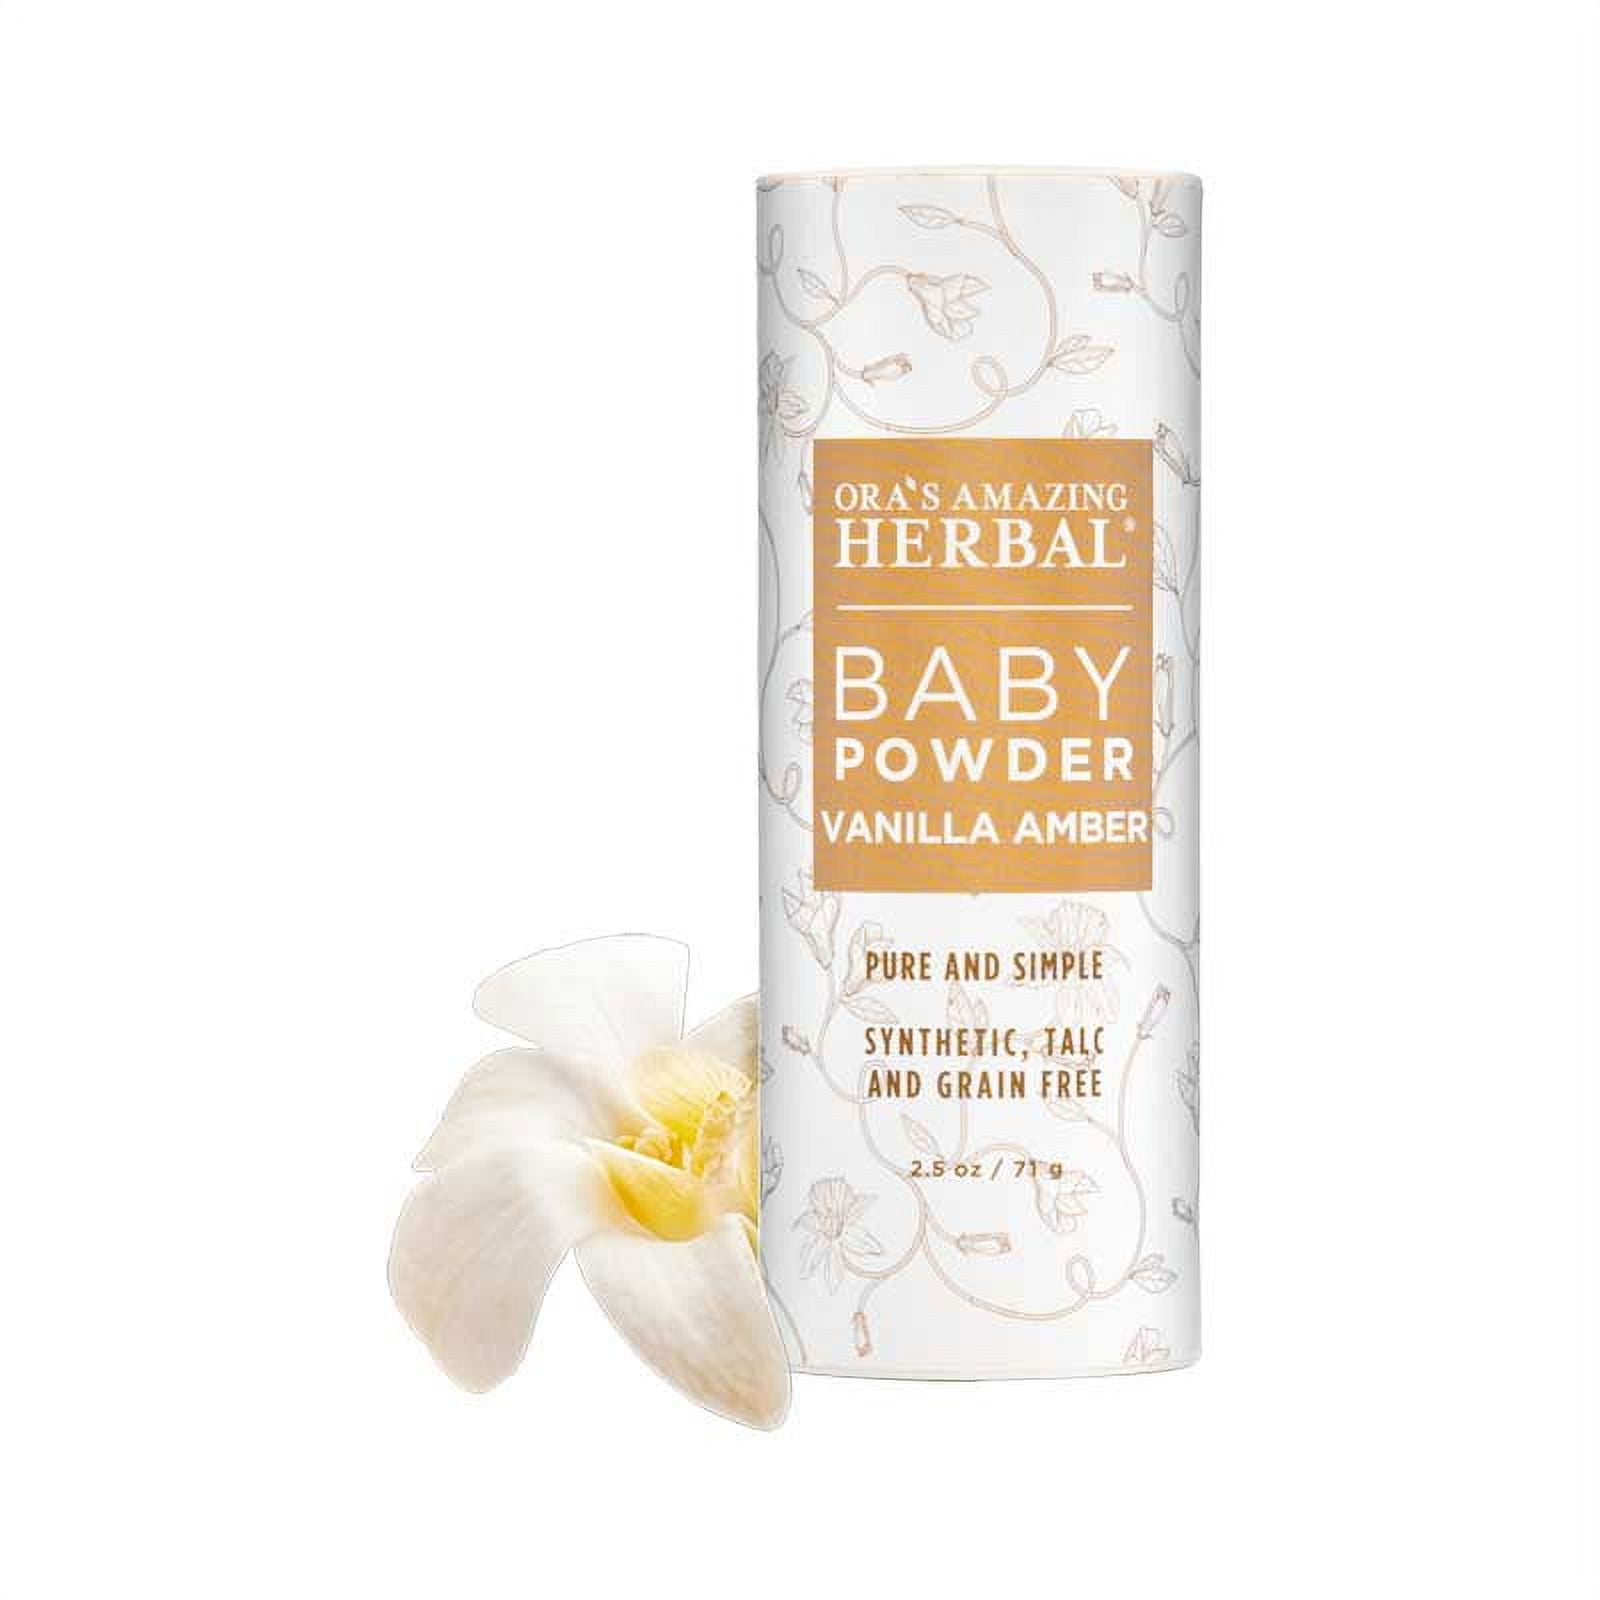 Ora's Amazing Herbal Simple & Silky Body Powder, Unscented - 2.5 oz